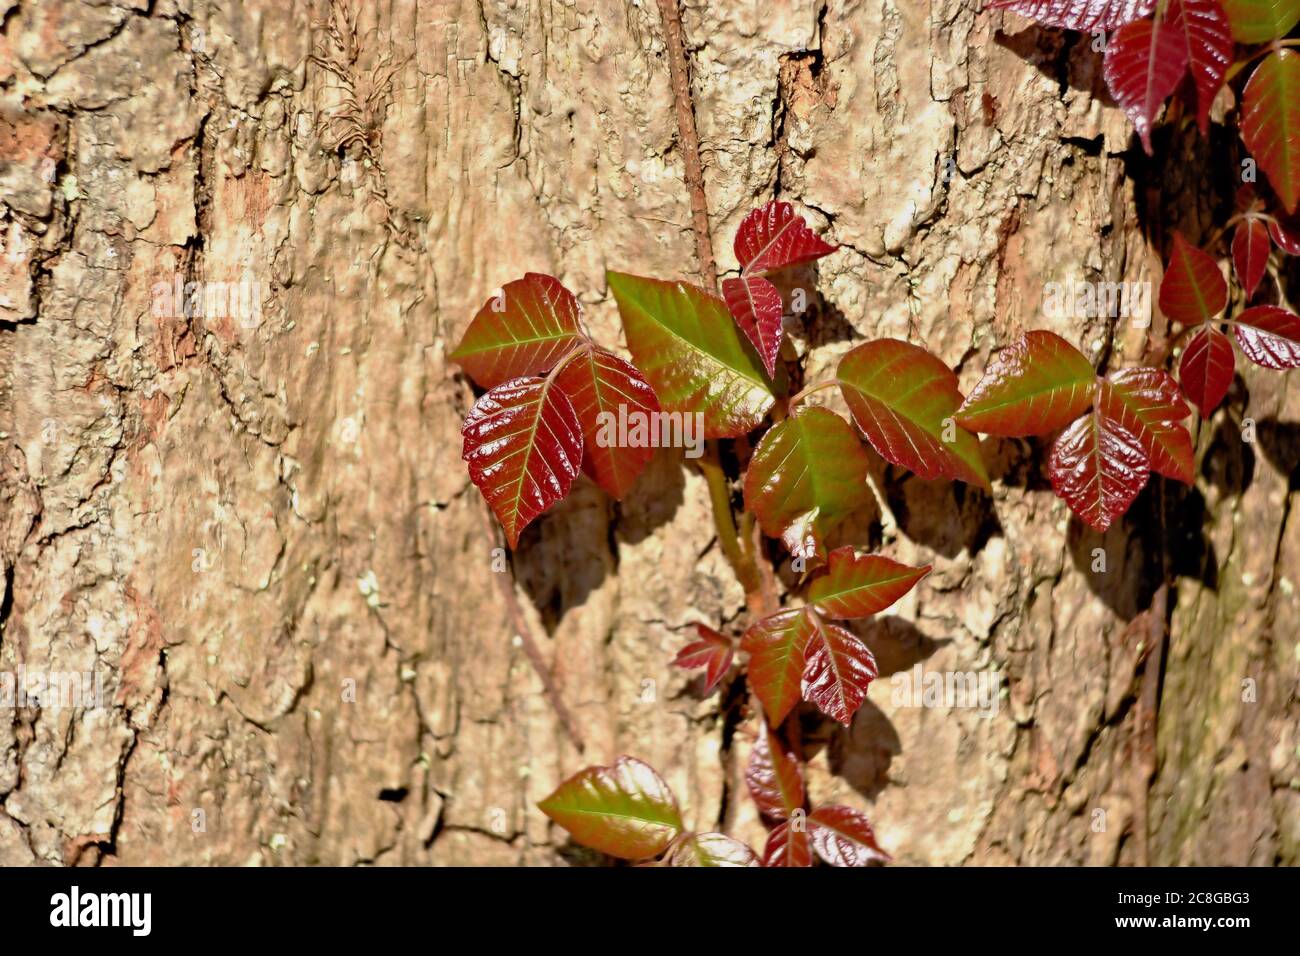 Poison Ivy Closeup climbing the bark of a tree trunk Stock Photo